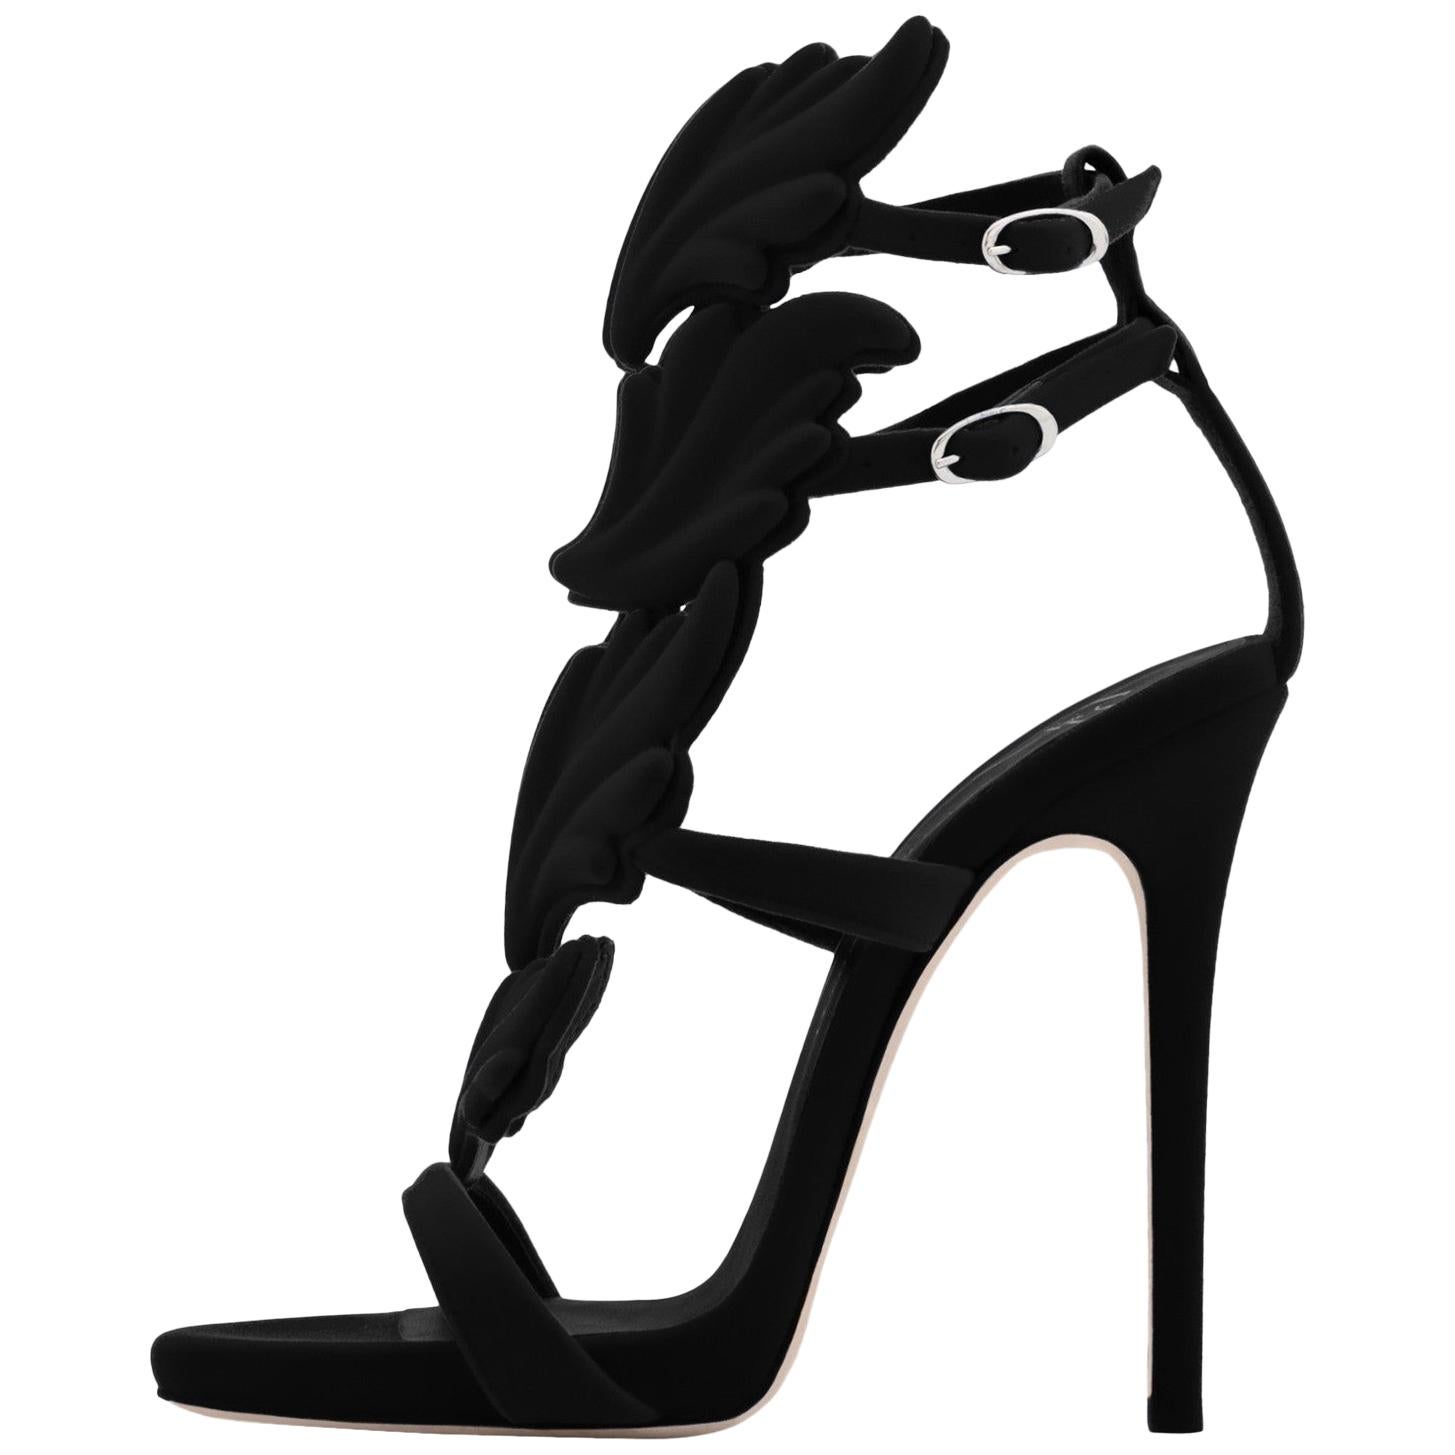 Giuseppe Zanotti NEW Black Suede Velvet Evening Sandals Heels in Box